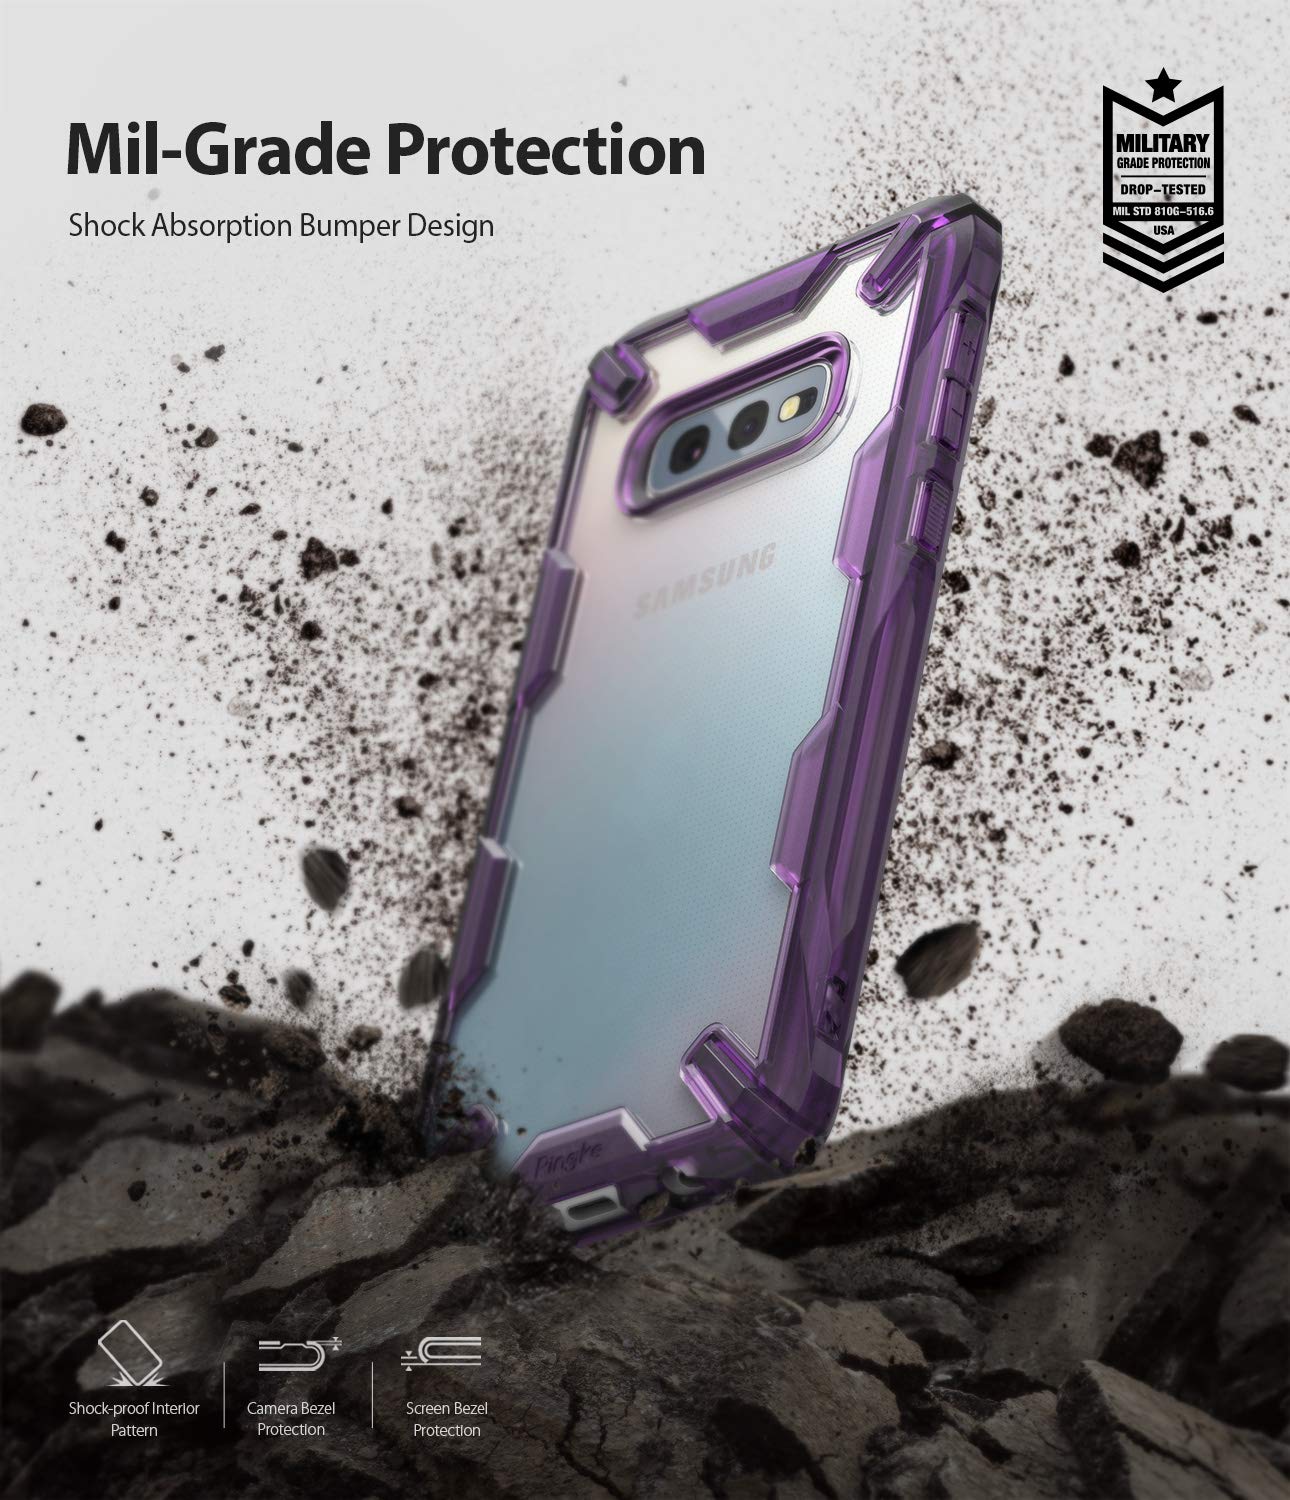 Samsung Galaxy S10E Fusion-X Royal Purple Case By Ringke